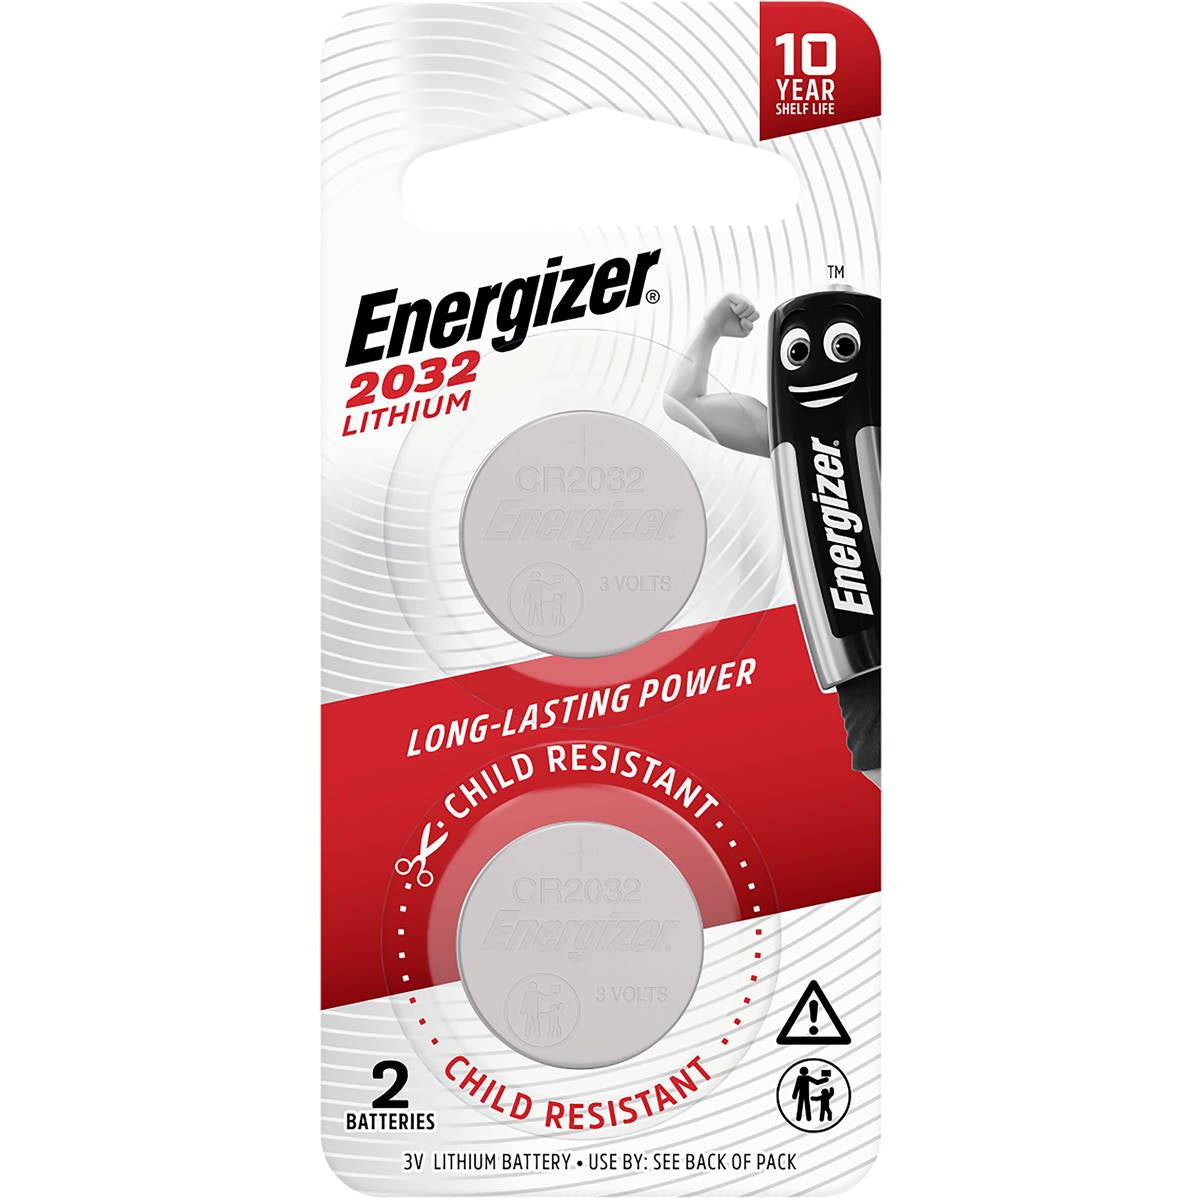 Energizer 2032 Lithium Batteries 2pk